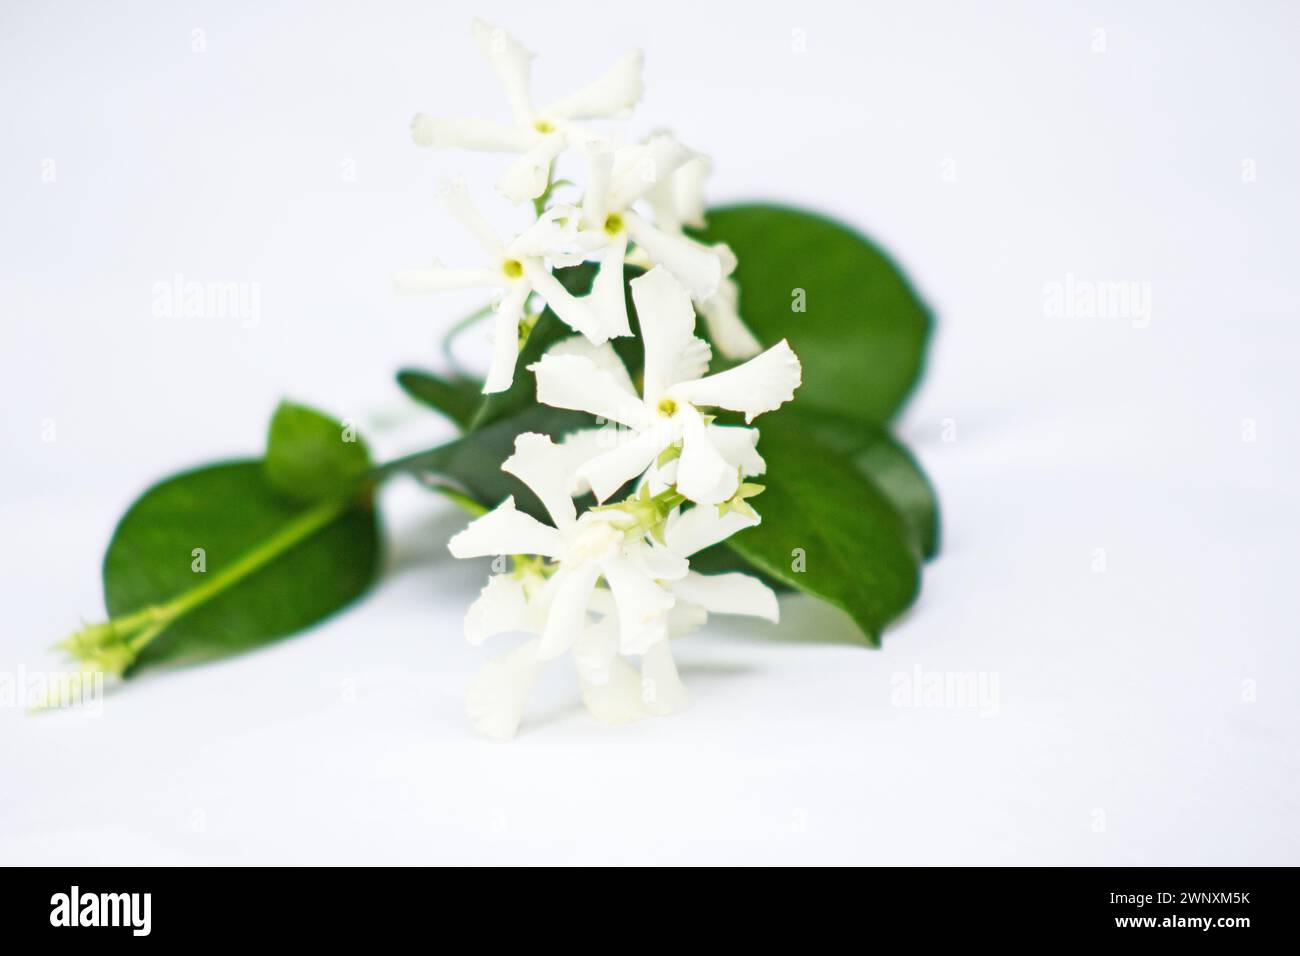 Star Jasmine (Trachelospermum jasminoides) blossoms on a white background Stock Photo